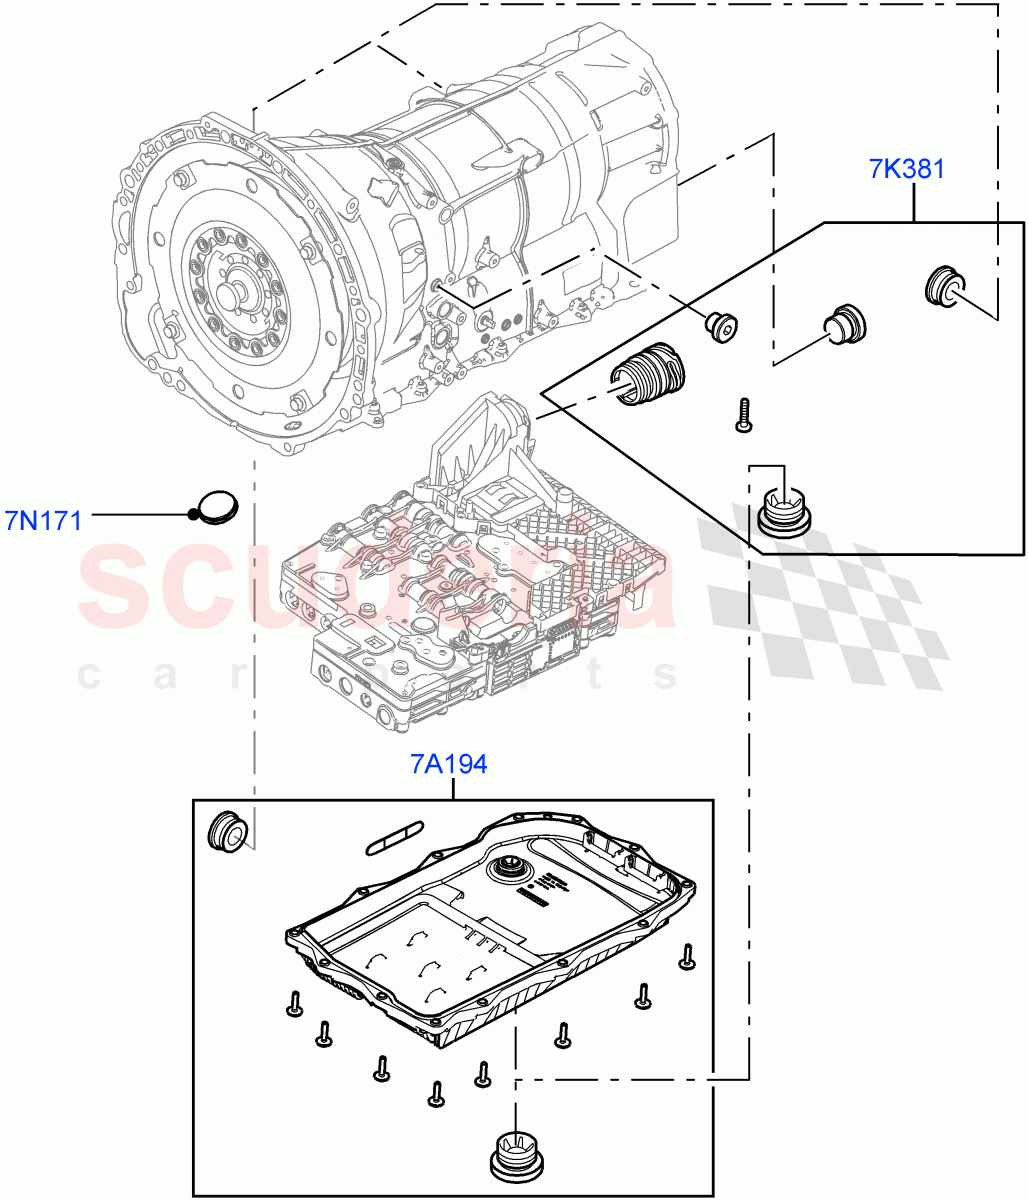 Transmission External Components(3.0L DOHC GDI SC V6 PETROL,8 Speed Auto Trans ZF 8HP70 4WD,3.0 V6 D Gen2 Twin Turbo) of Land Rover Land Rover Range Rover Velar (2017+) [3.0 Diesel 24V DOHC TC]